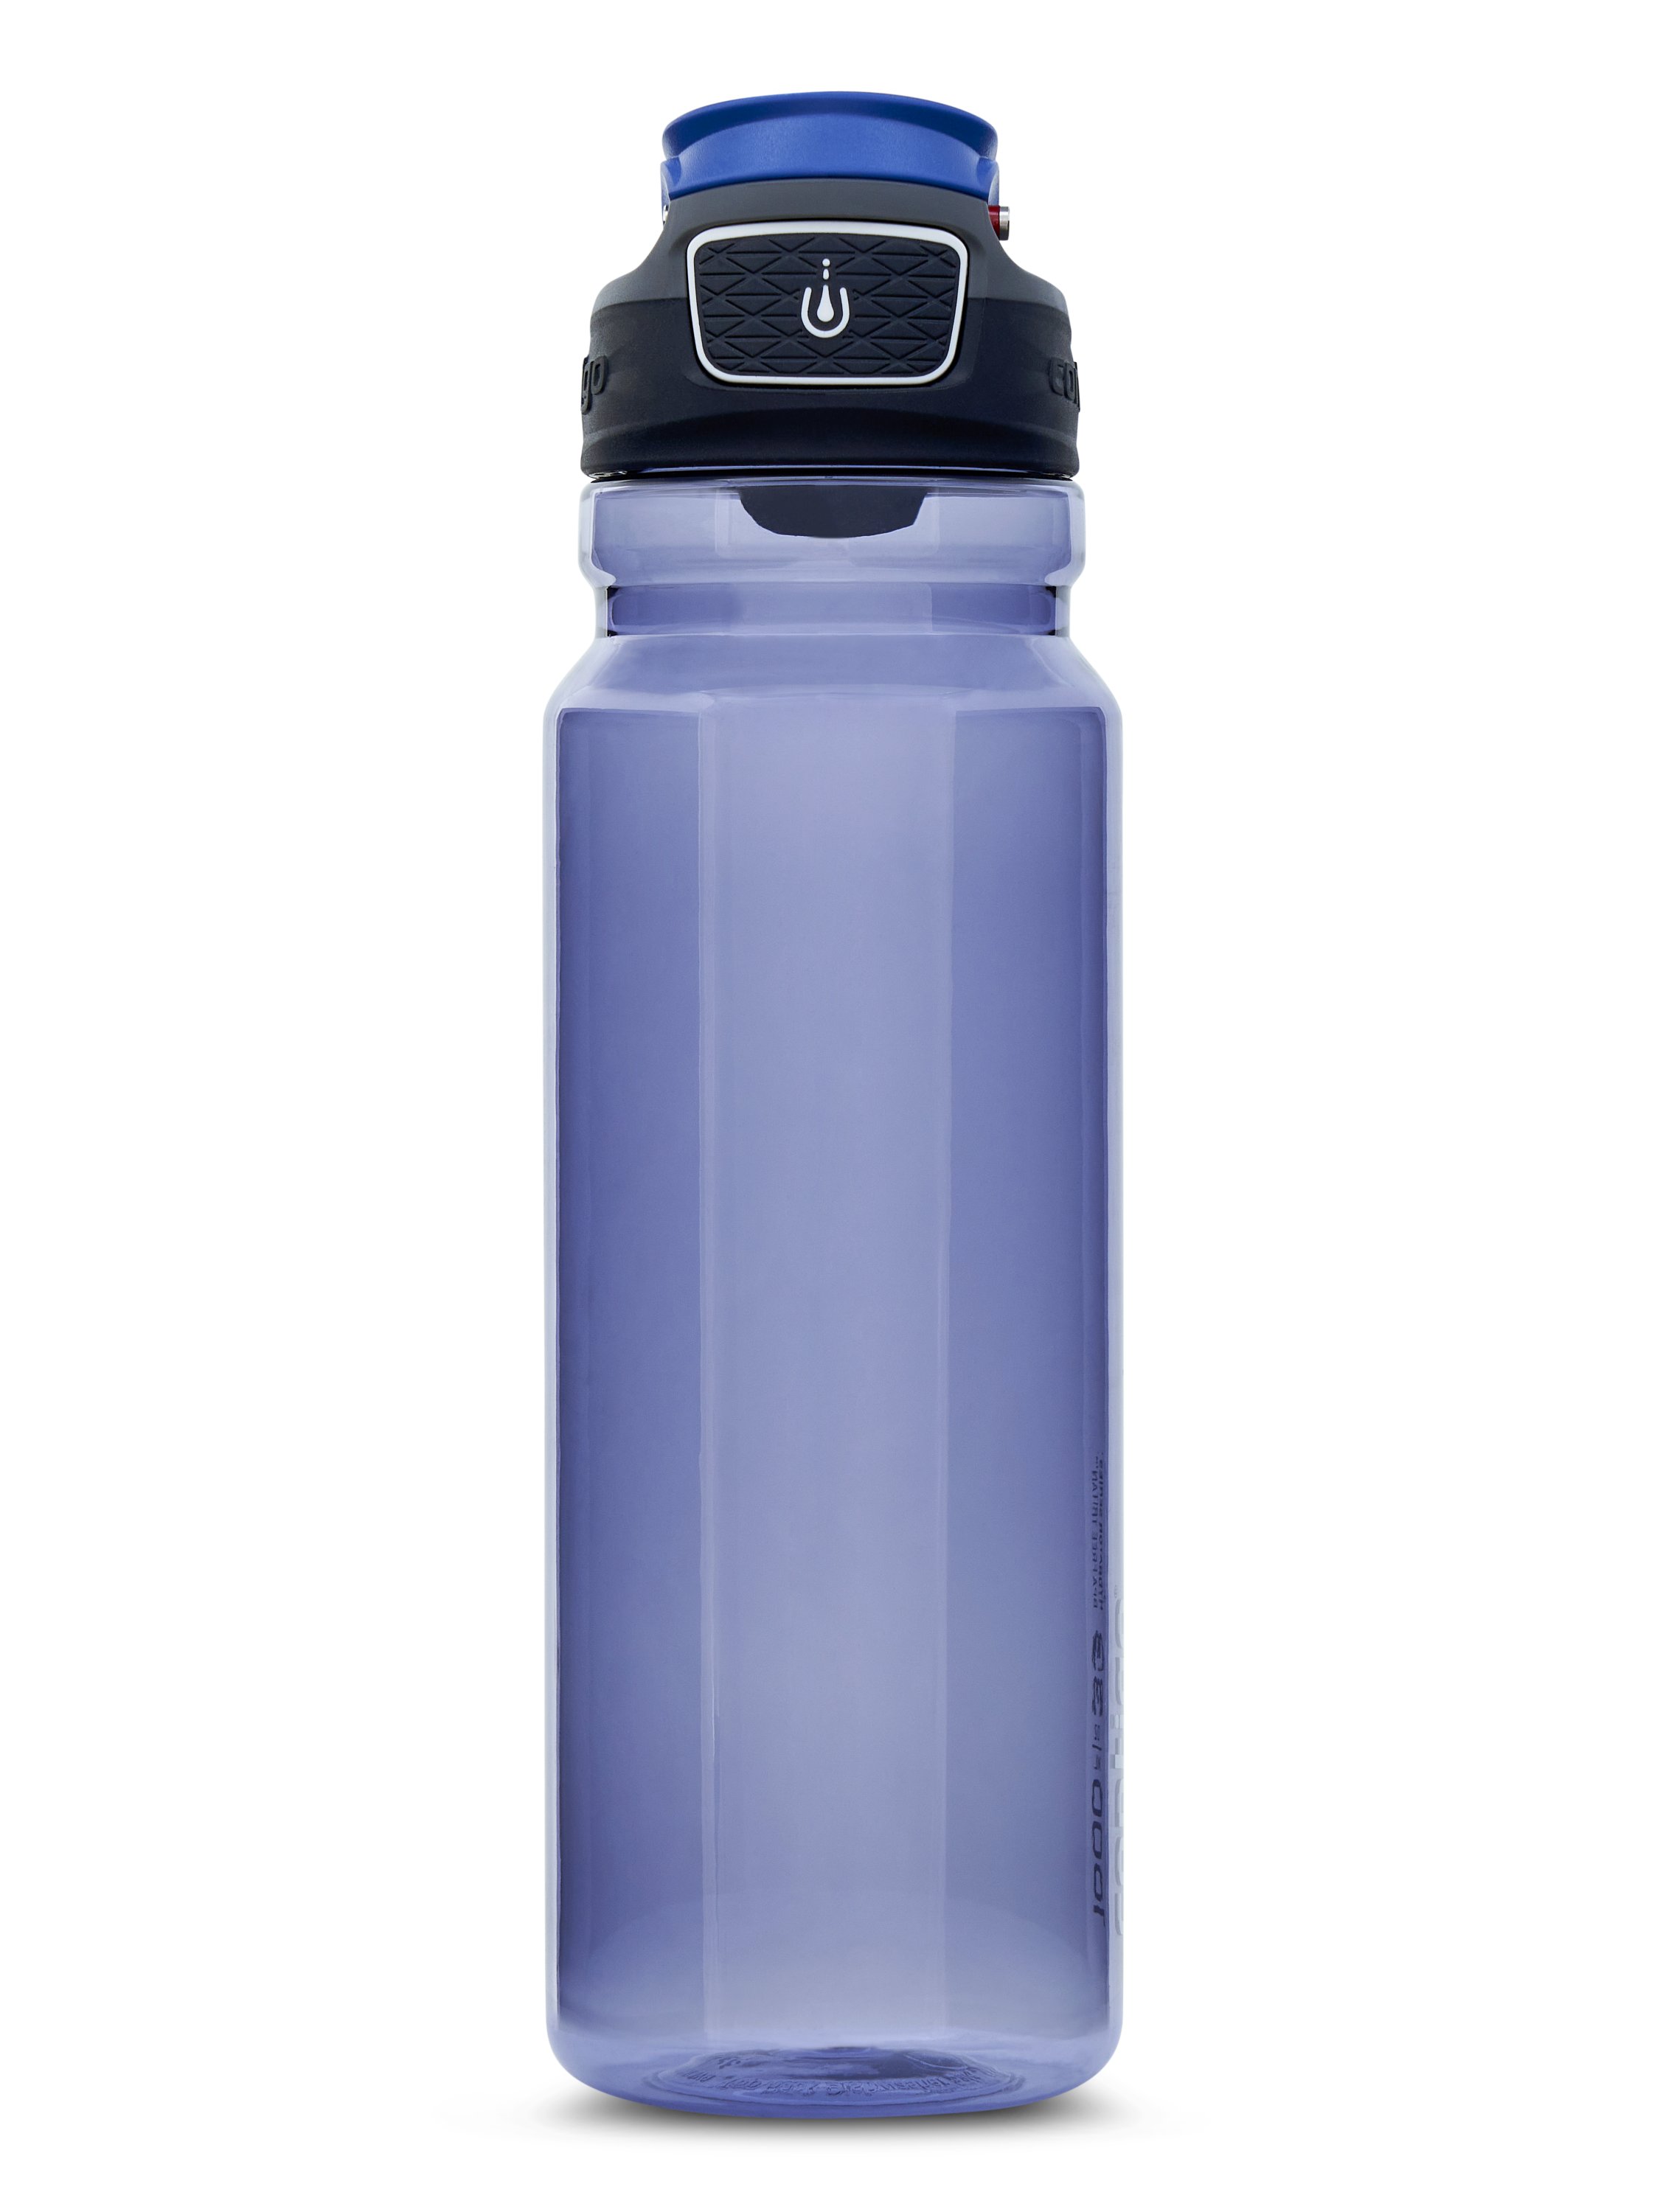 Contigo Jackson Water Bottles, Licorice/Blue Corn, 1 Quart, 2 Pack - 2 bottles